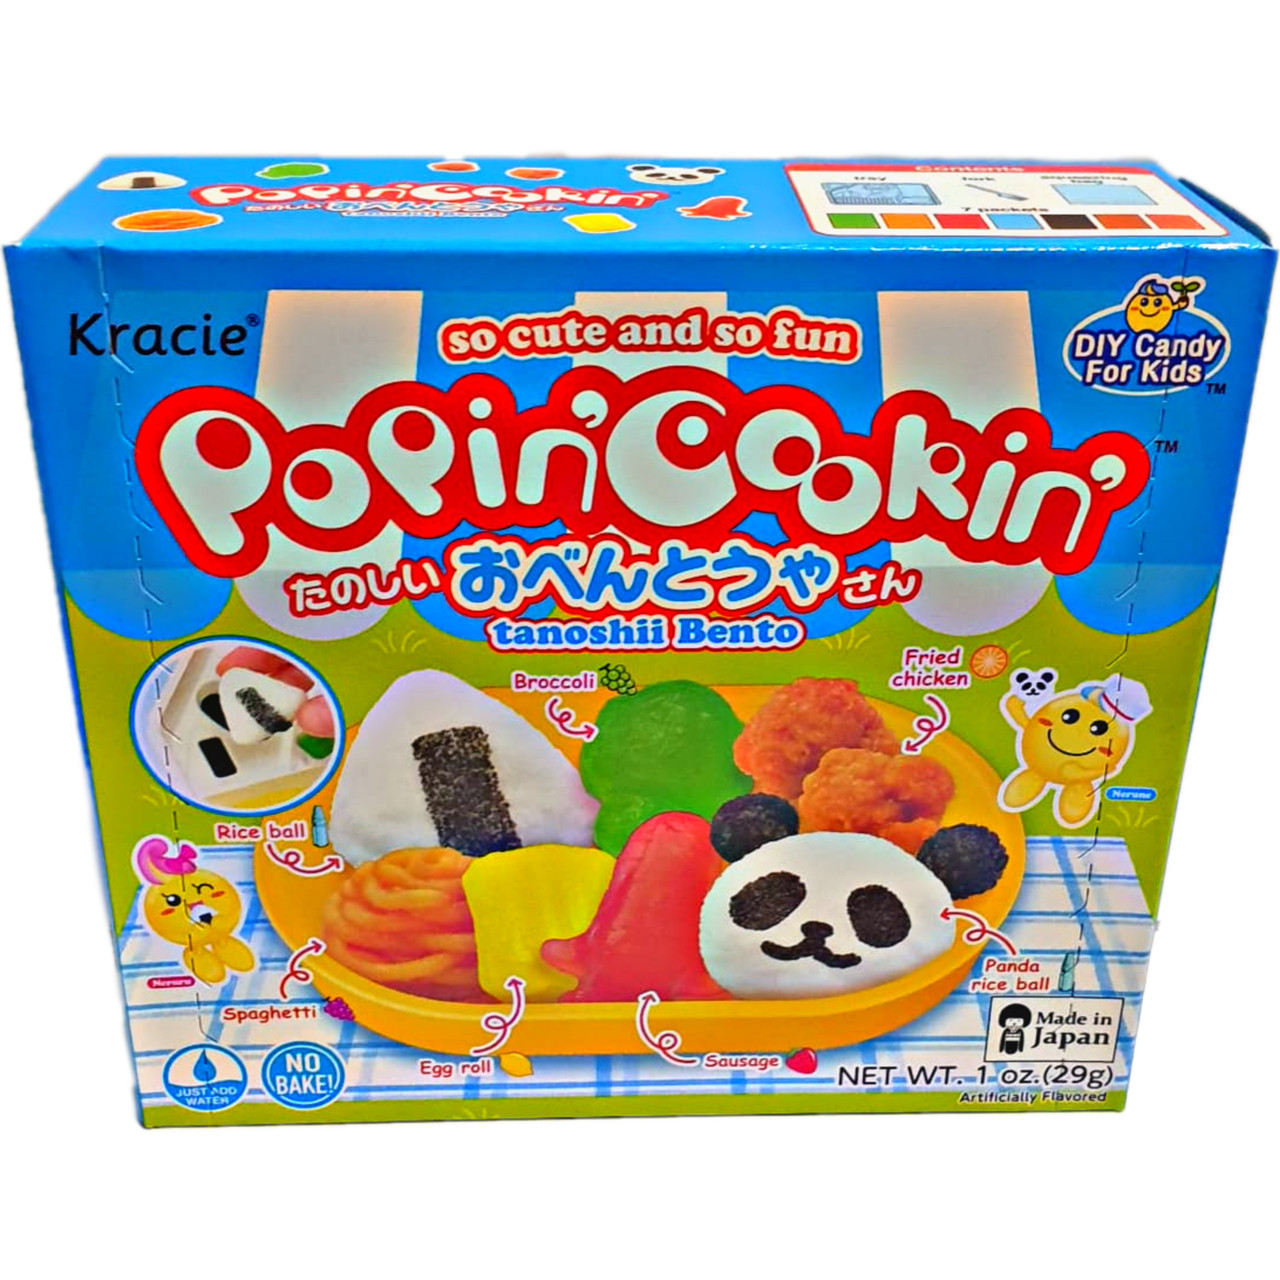 Kracle Popin Cookin Fun Candy Ramen Kit, 1.1 Ounce -- 5 per case